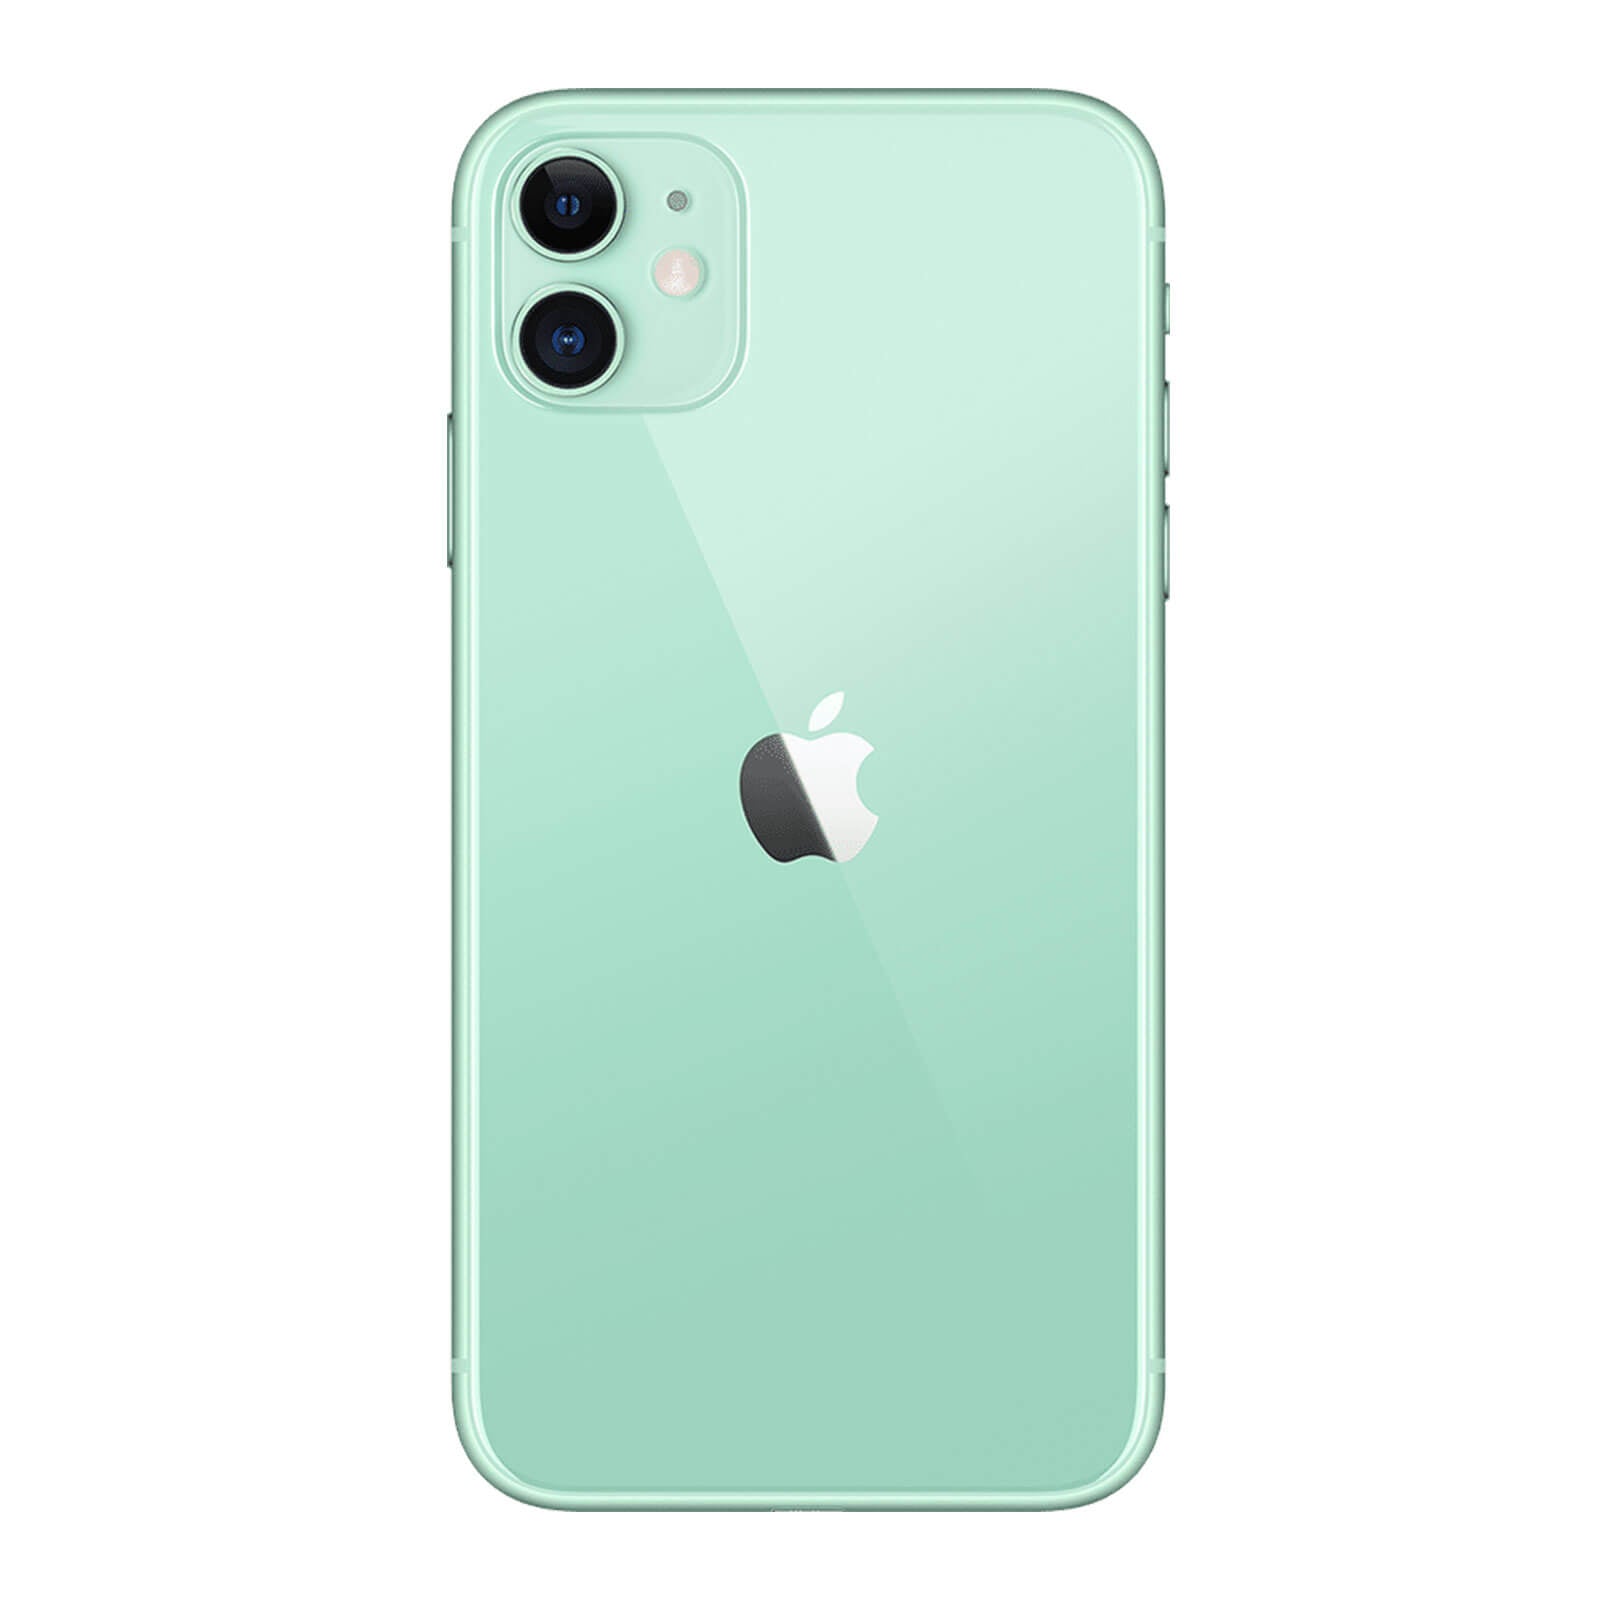 Apple iPhone 11 256GB Verde Discreto Sbloccato